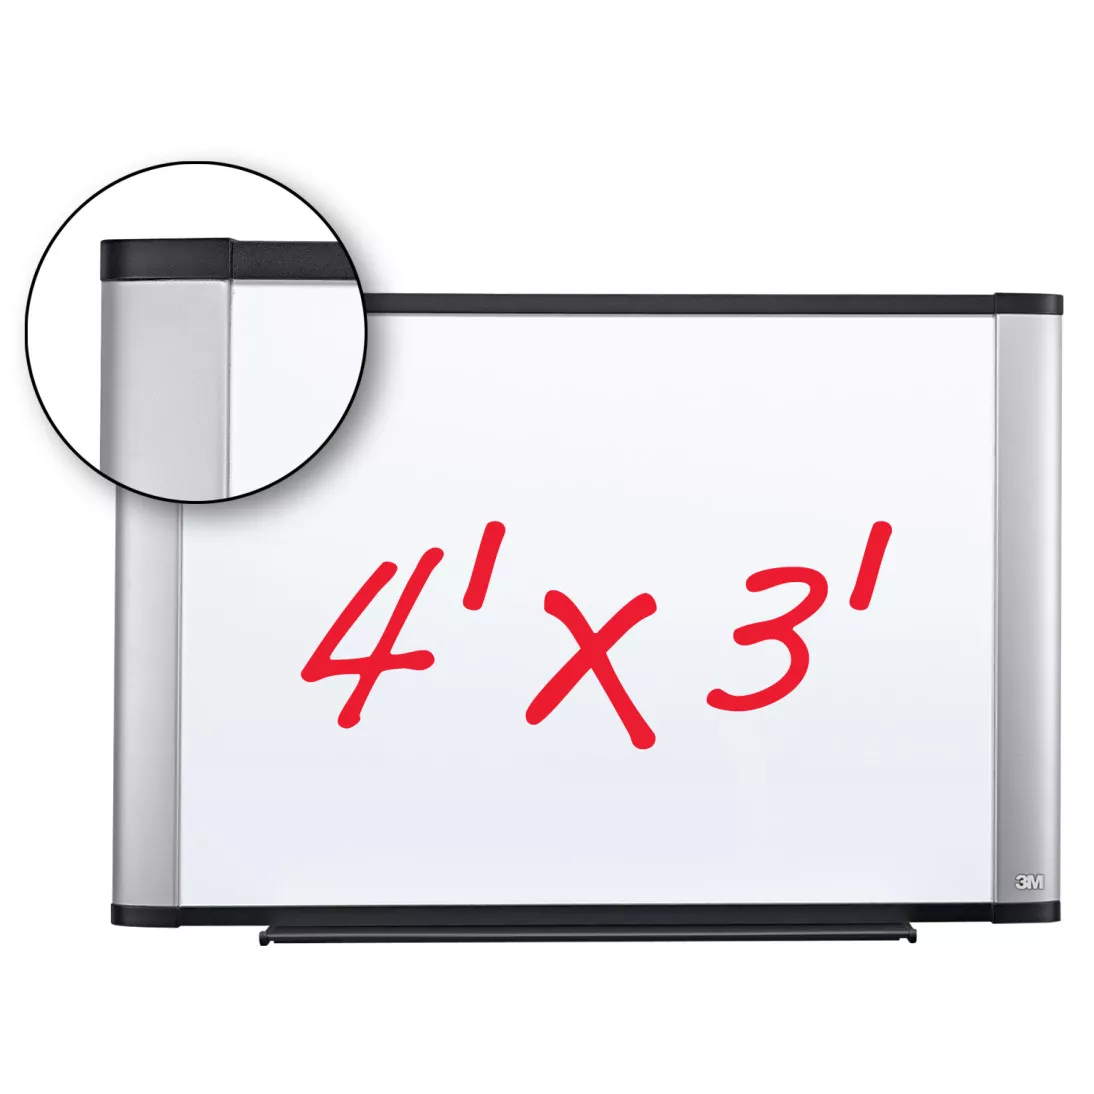 3M™ Melamine Dry Erase Board M4836A, 48 in x 36 in x 1 in (121.9 cm x
91.4 cm x 2.5 cm) Aluminum Frame